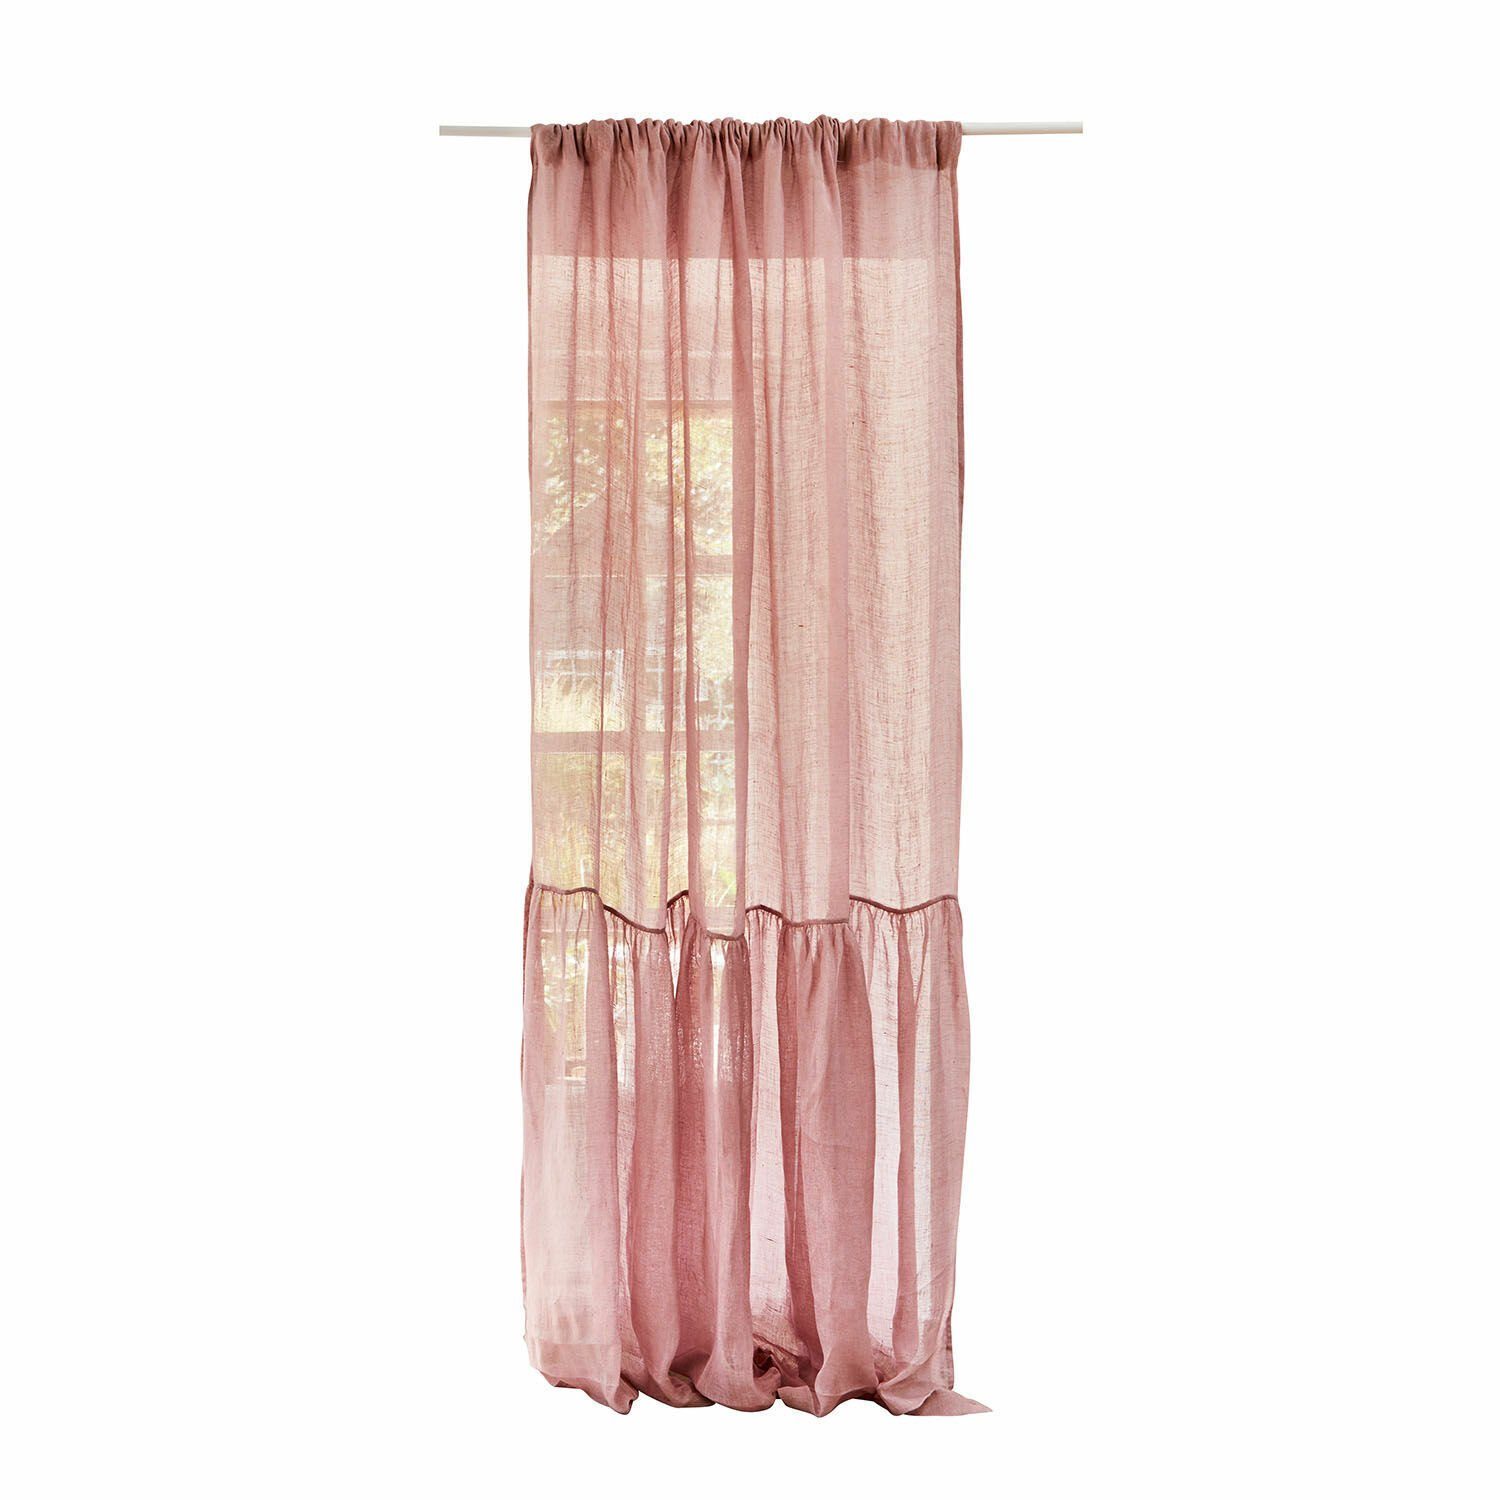 Vorhang Gardine Drimmelen rosa, Mirabeau